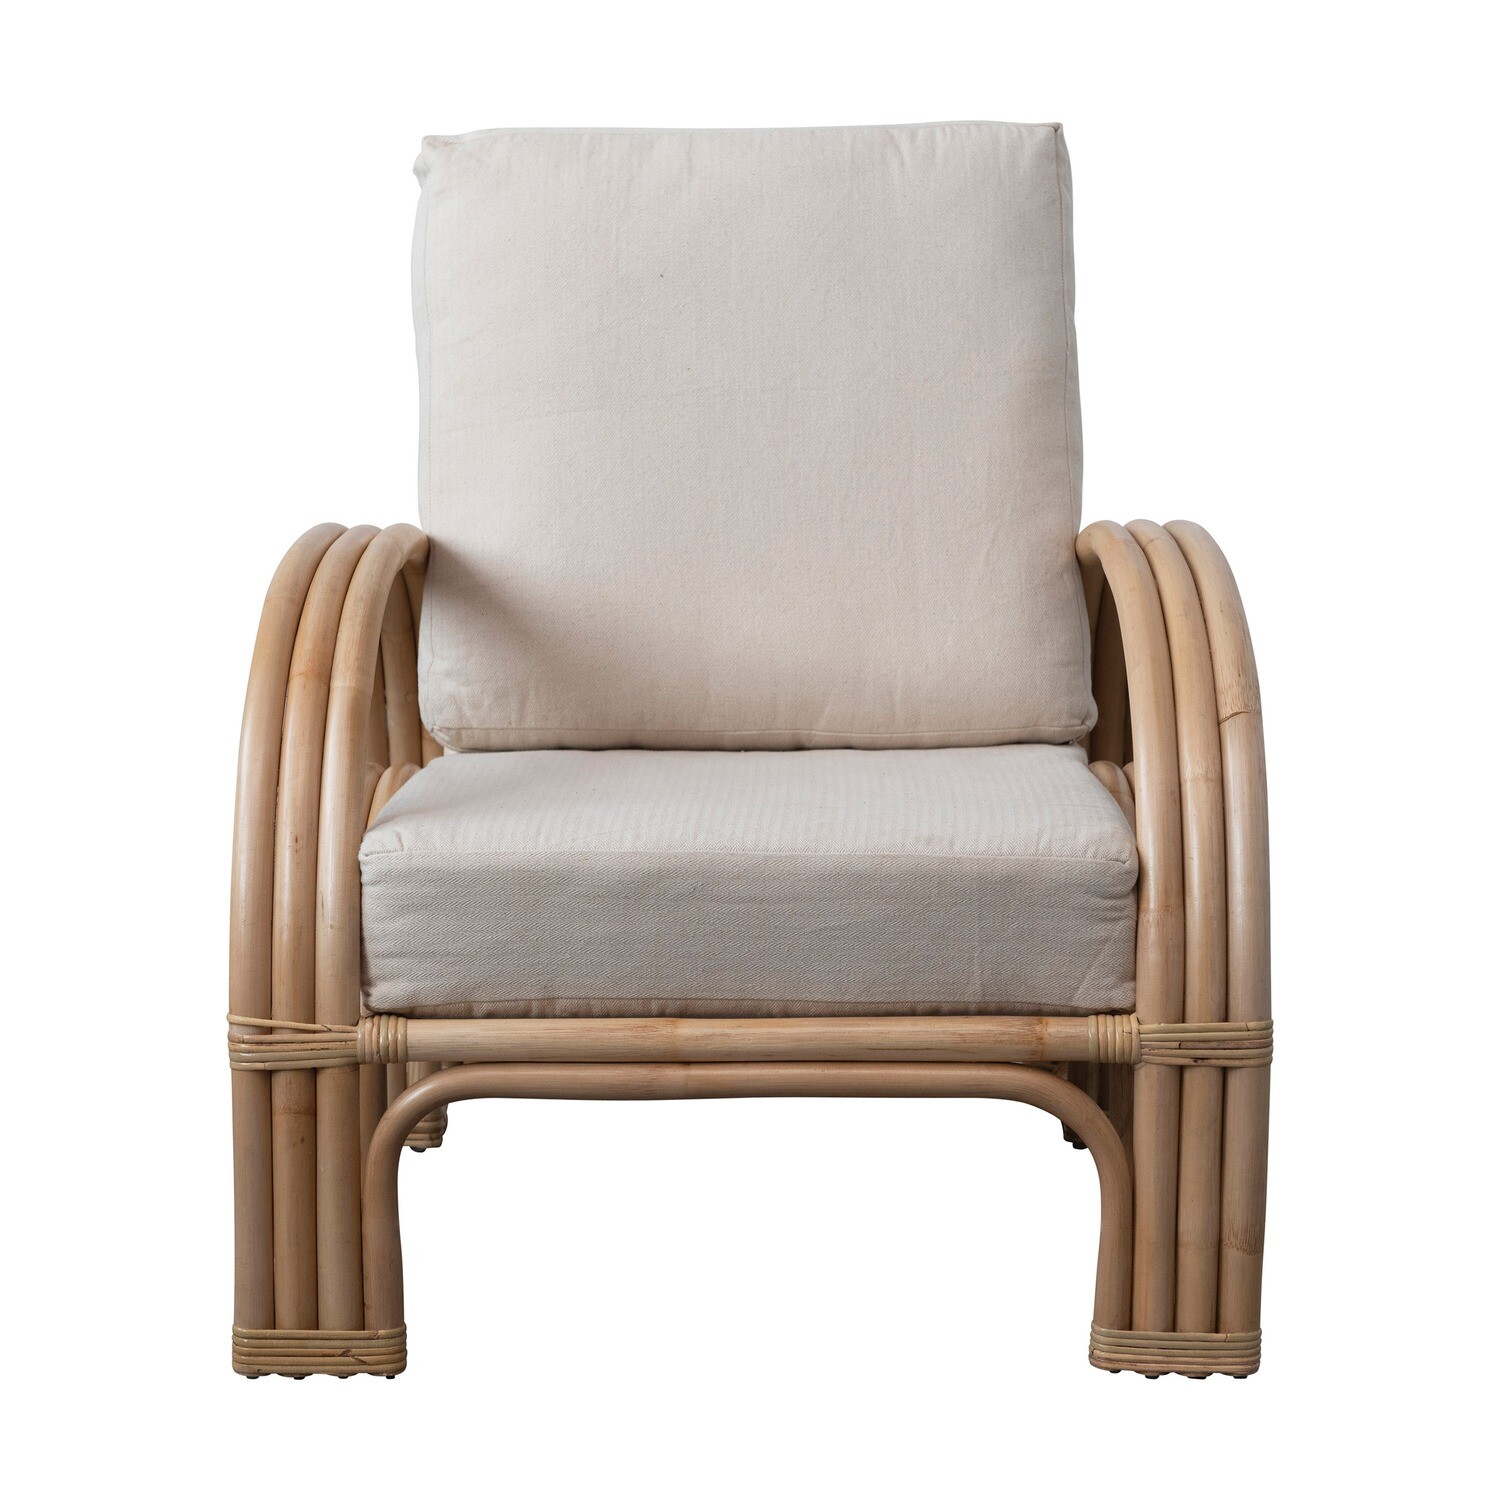 Cushioned Hand-Woven Rattan Chair